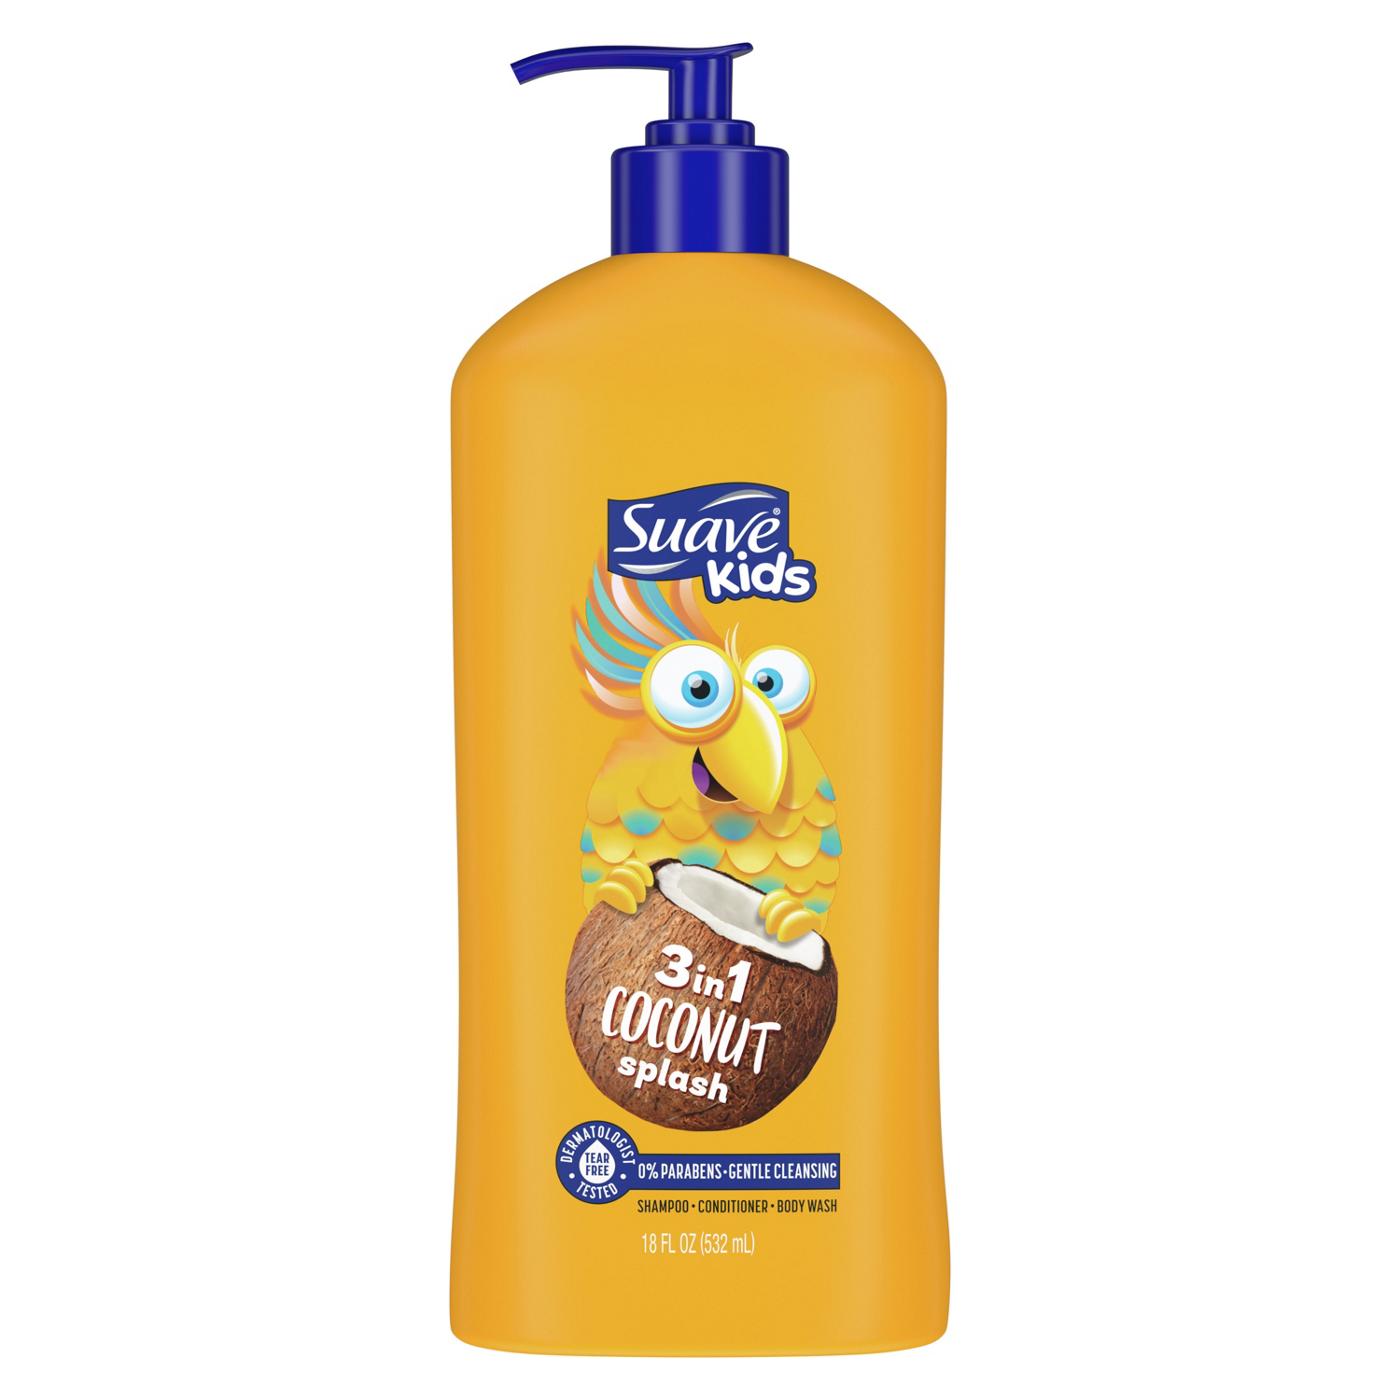 Suave Kids 3-in-1 Shampoo + Conditioner + Body Wash - Coconut Splash; image 1 of 7